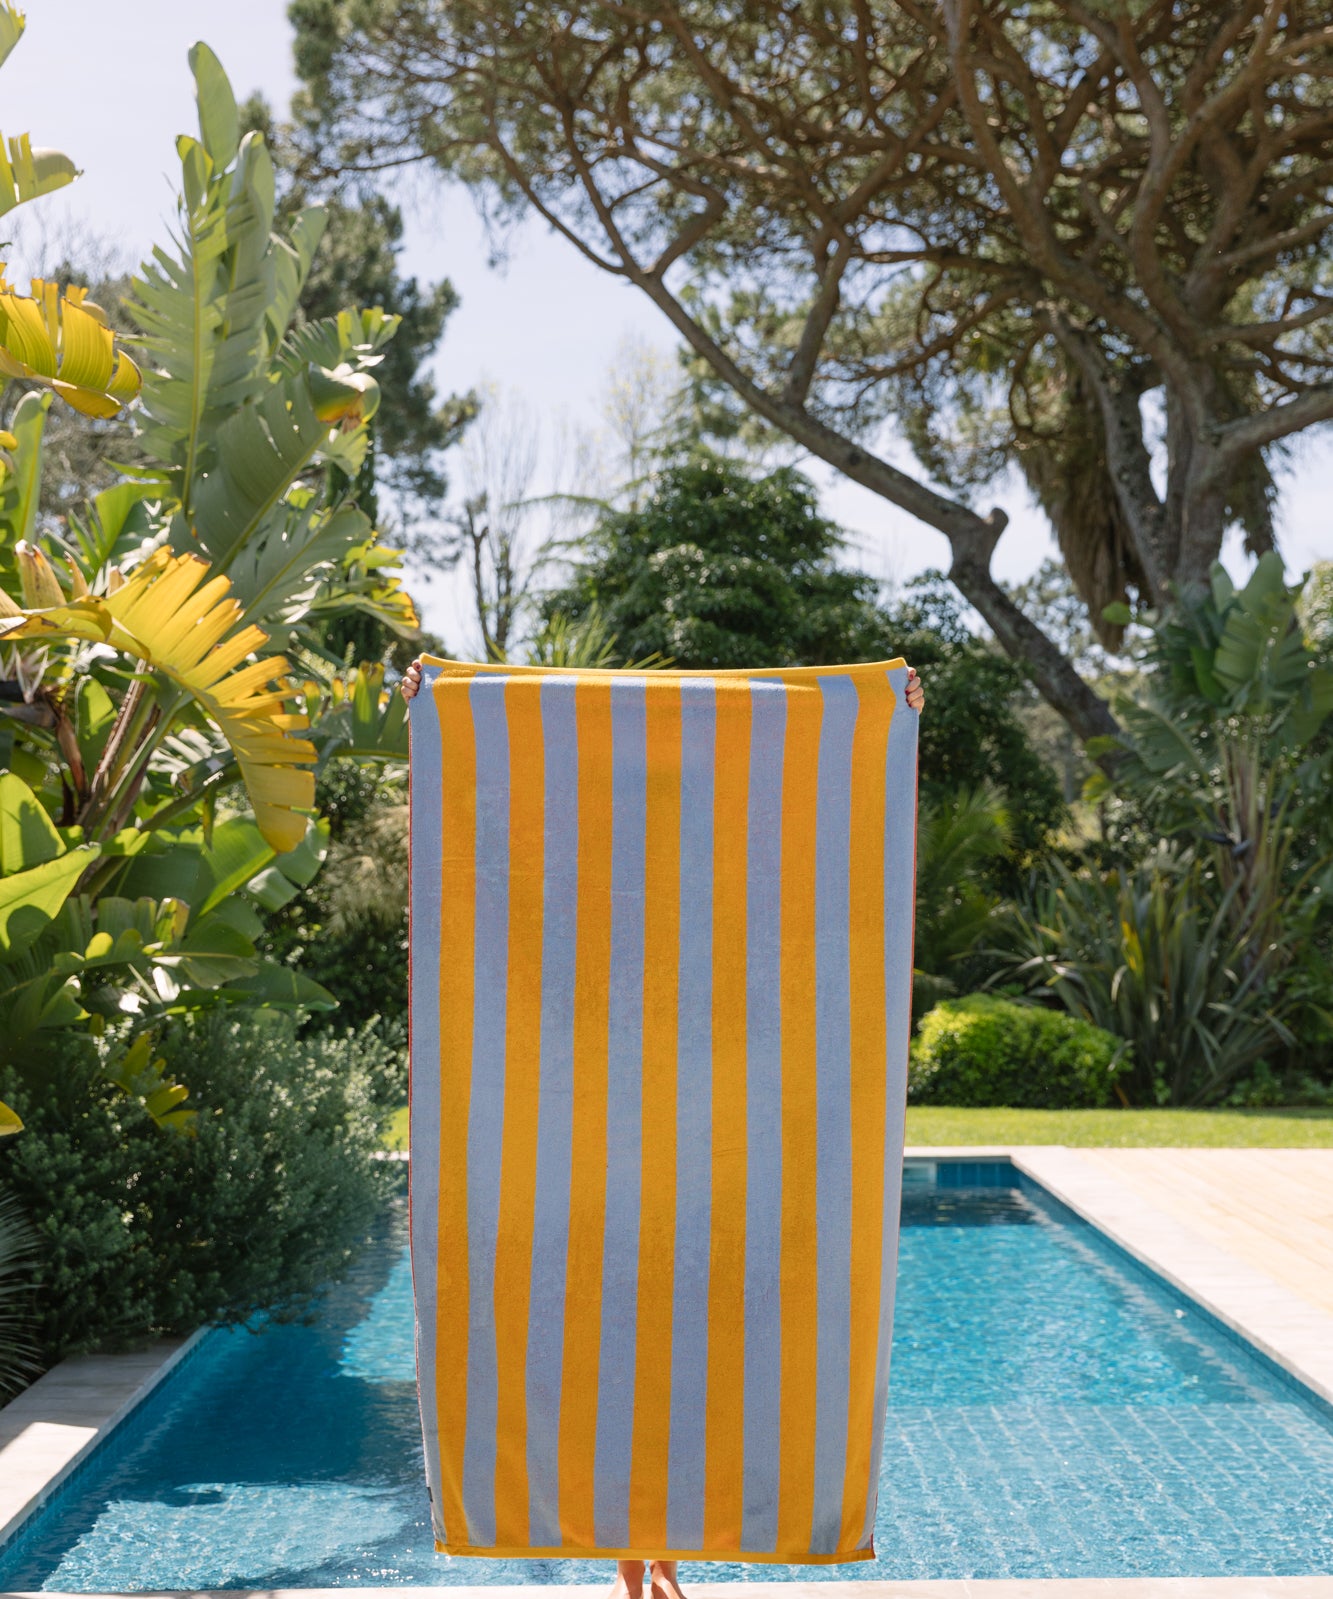 torres-novas-pena-reversible-beach-towels-vertical-stripes-product-yellow-blue-2.jpg